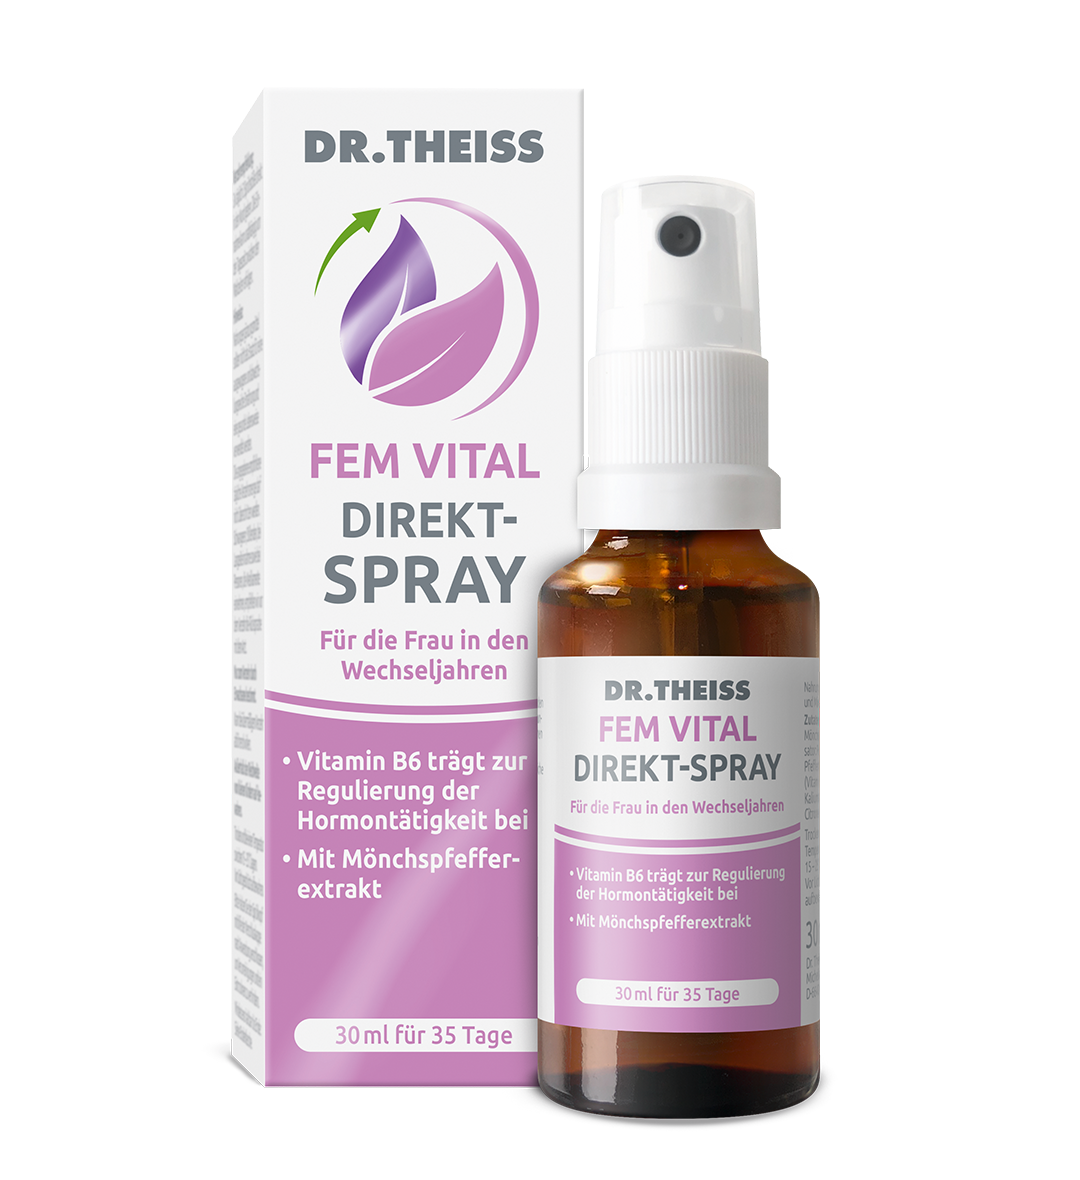 DR. THEISS FEM VITAL Direkt-Spray